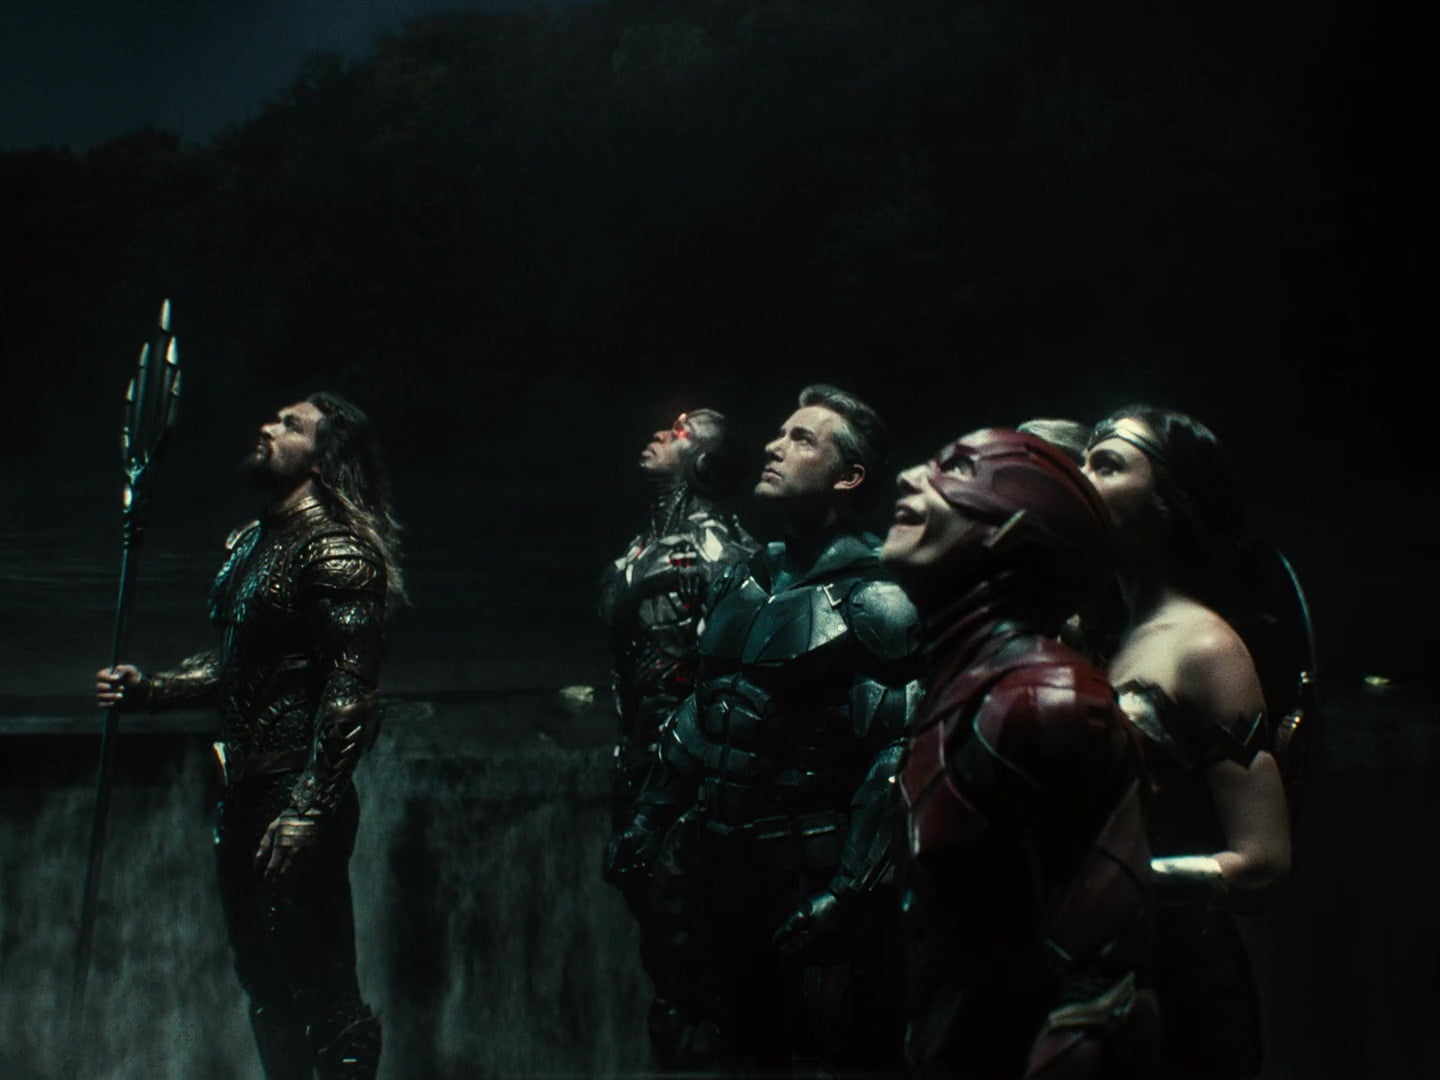 Wonder Woman, Flash, Aquaman, Batman, Zack Snyder's Justice League